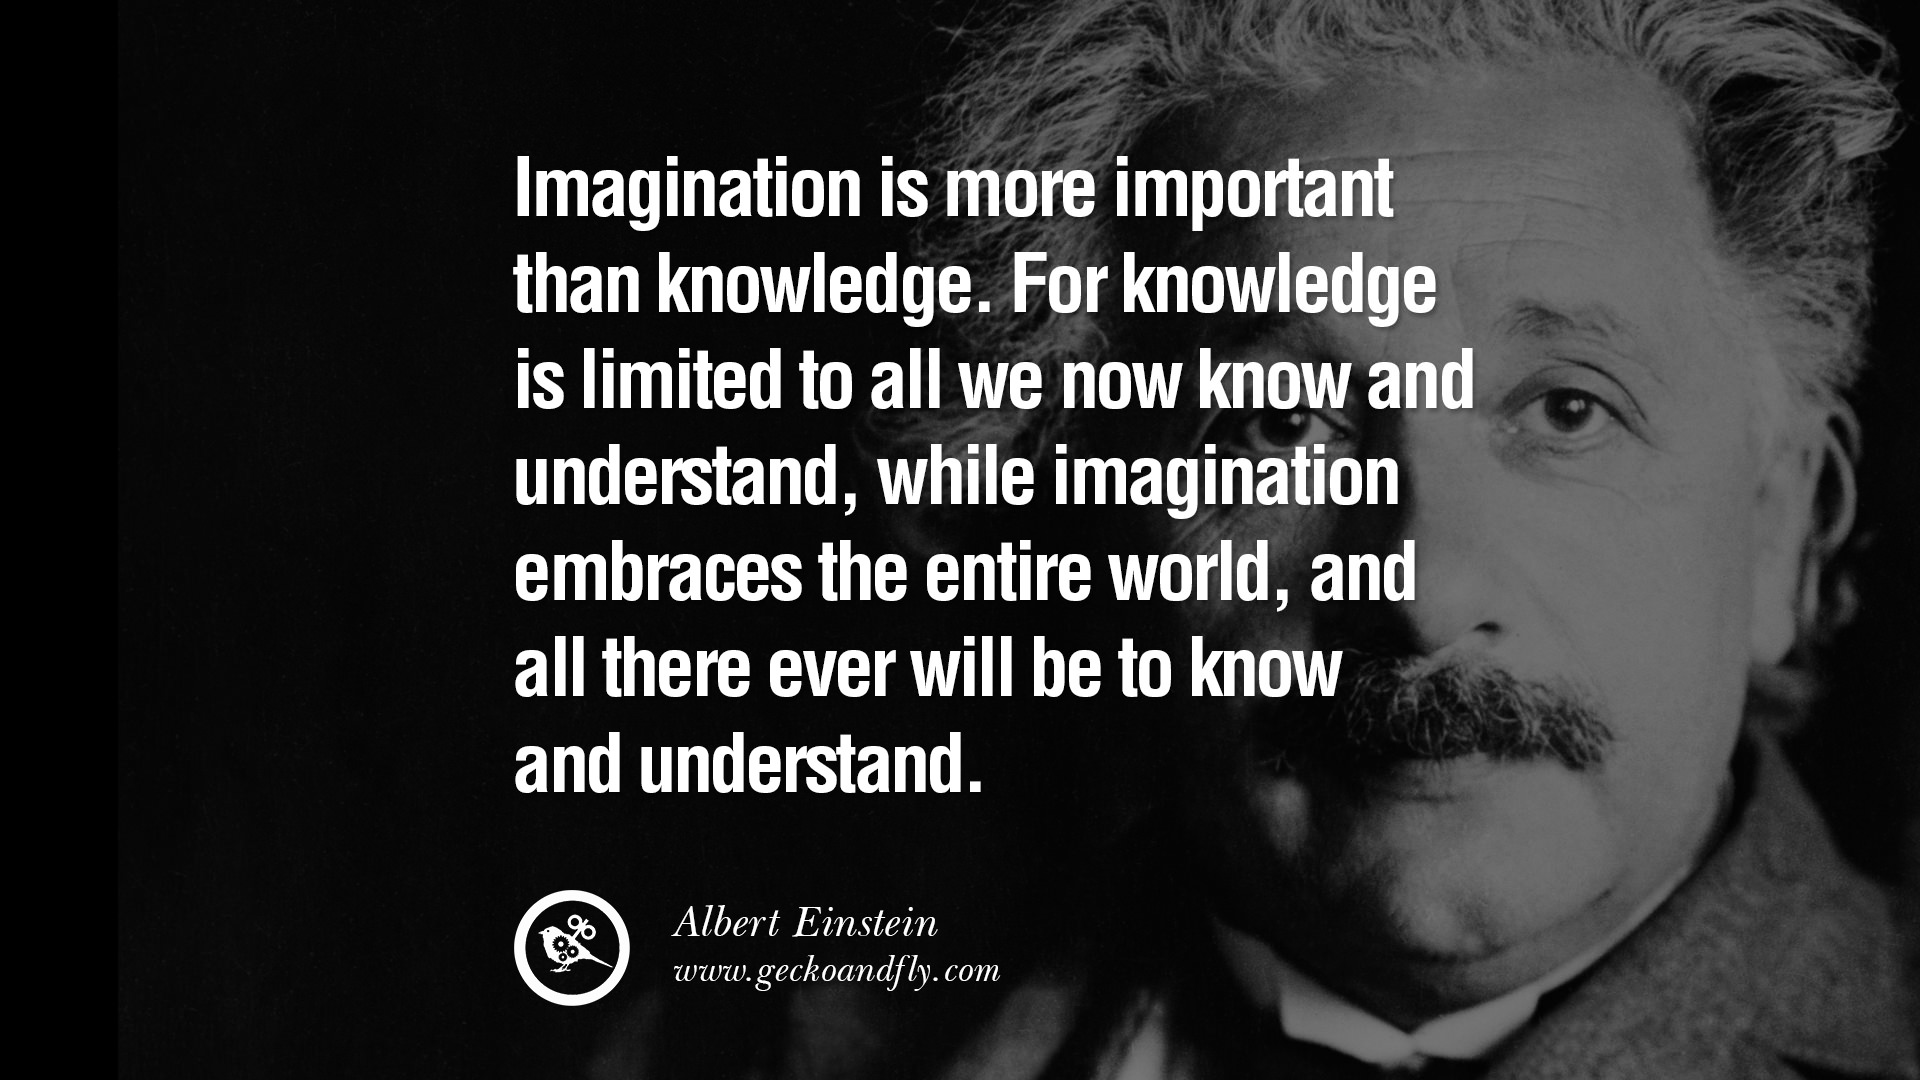 Imagination most